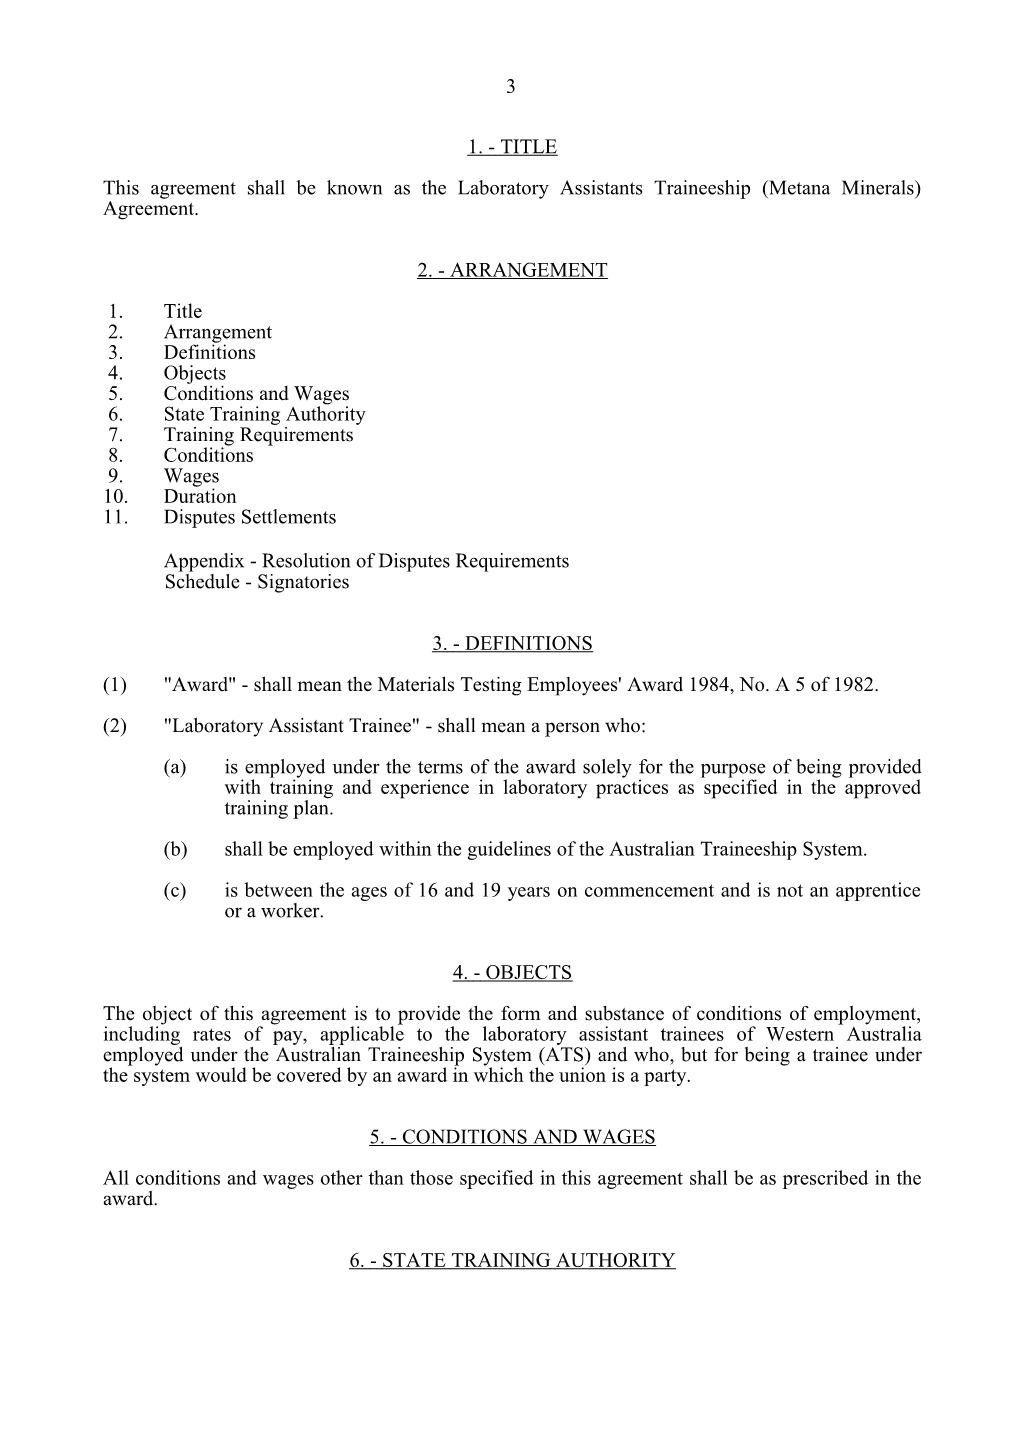 Laboratory Assistants Traineeship (Metana Minerals) Agreement